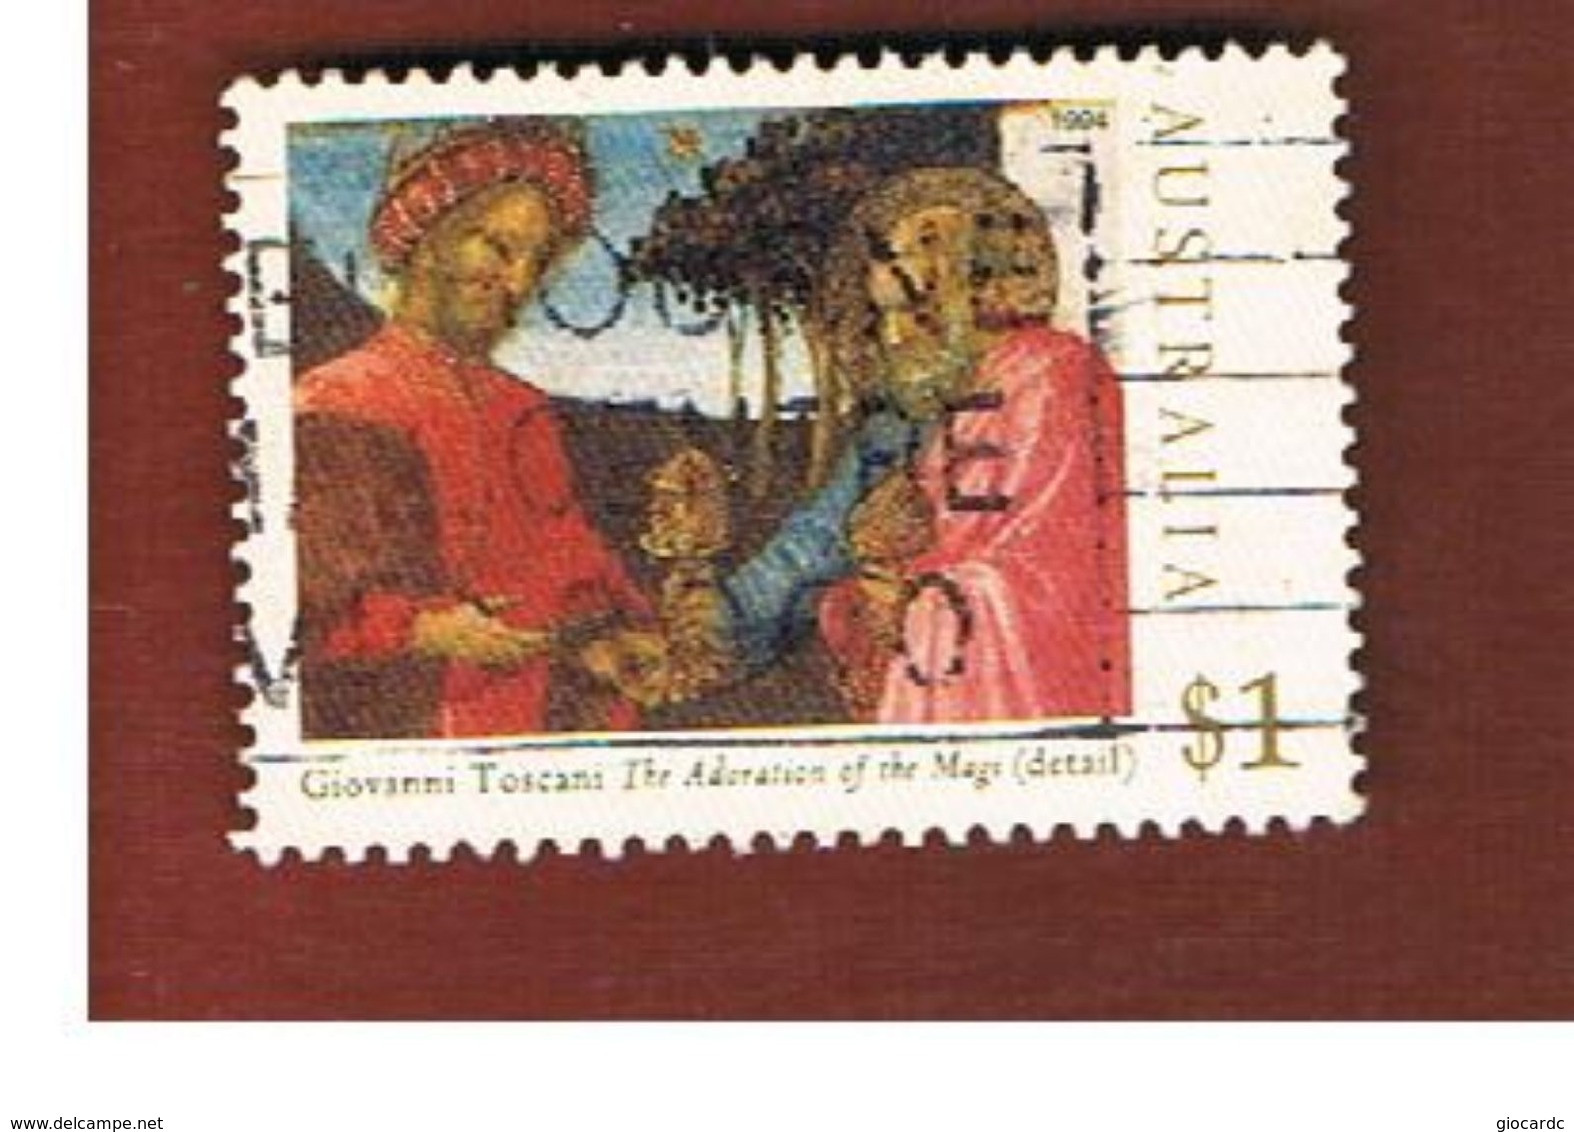 AUSTRALIA  -  SG 1489  -      1994  CHRISTMAS       -       USED - Gebruikt